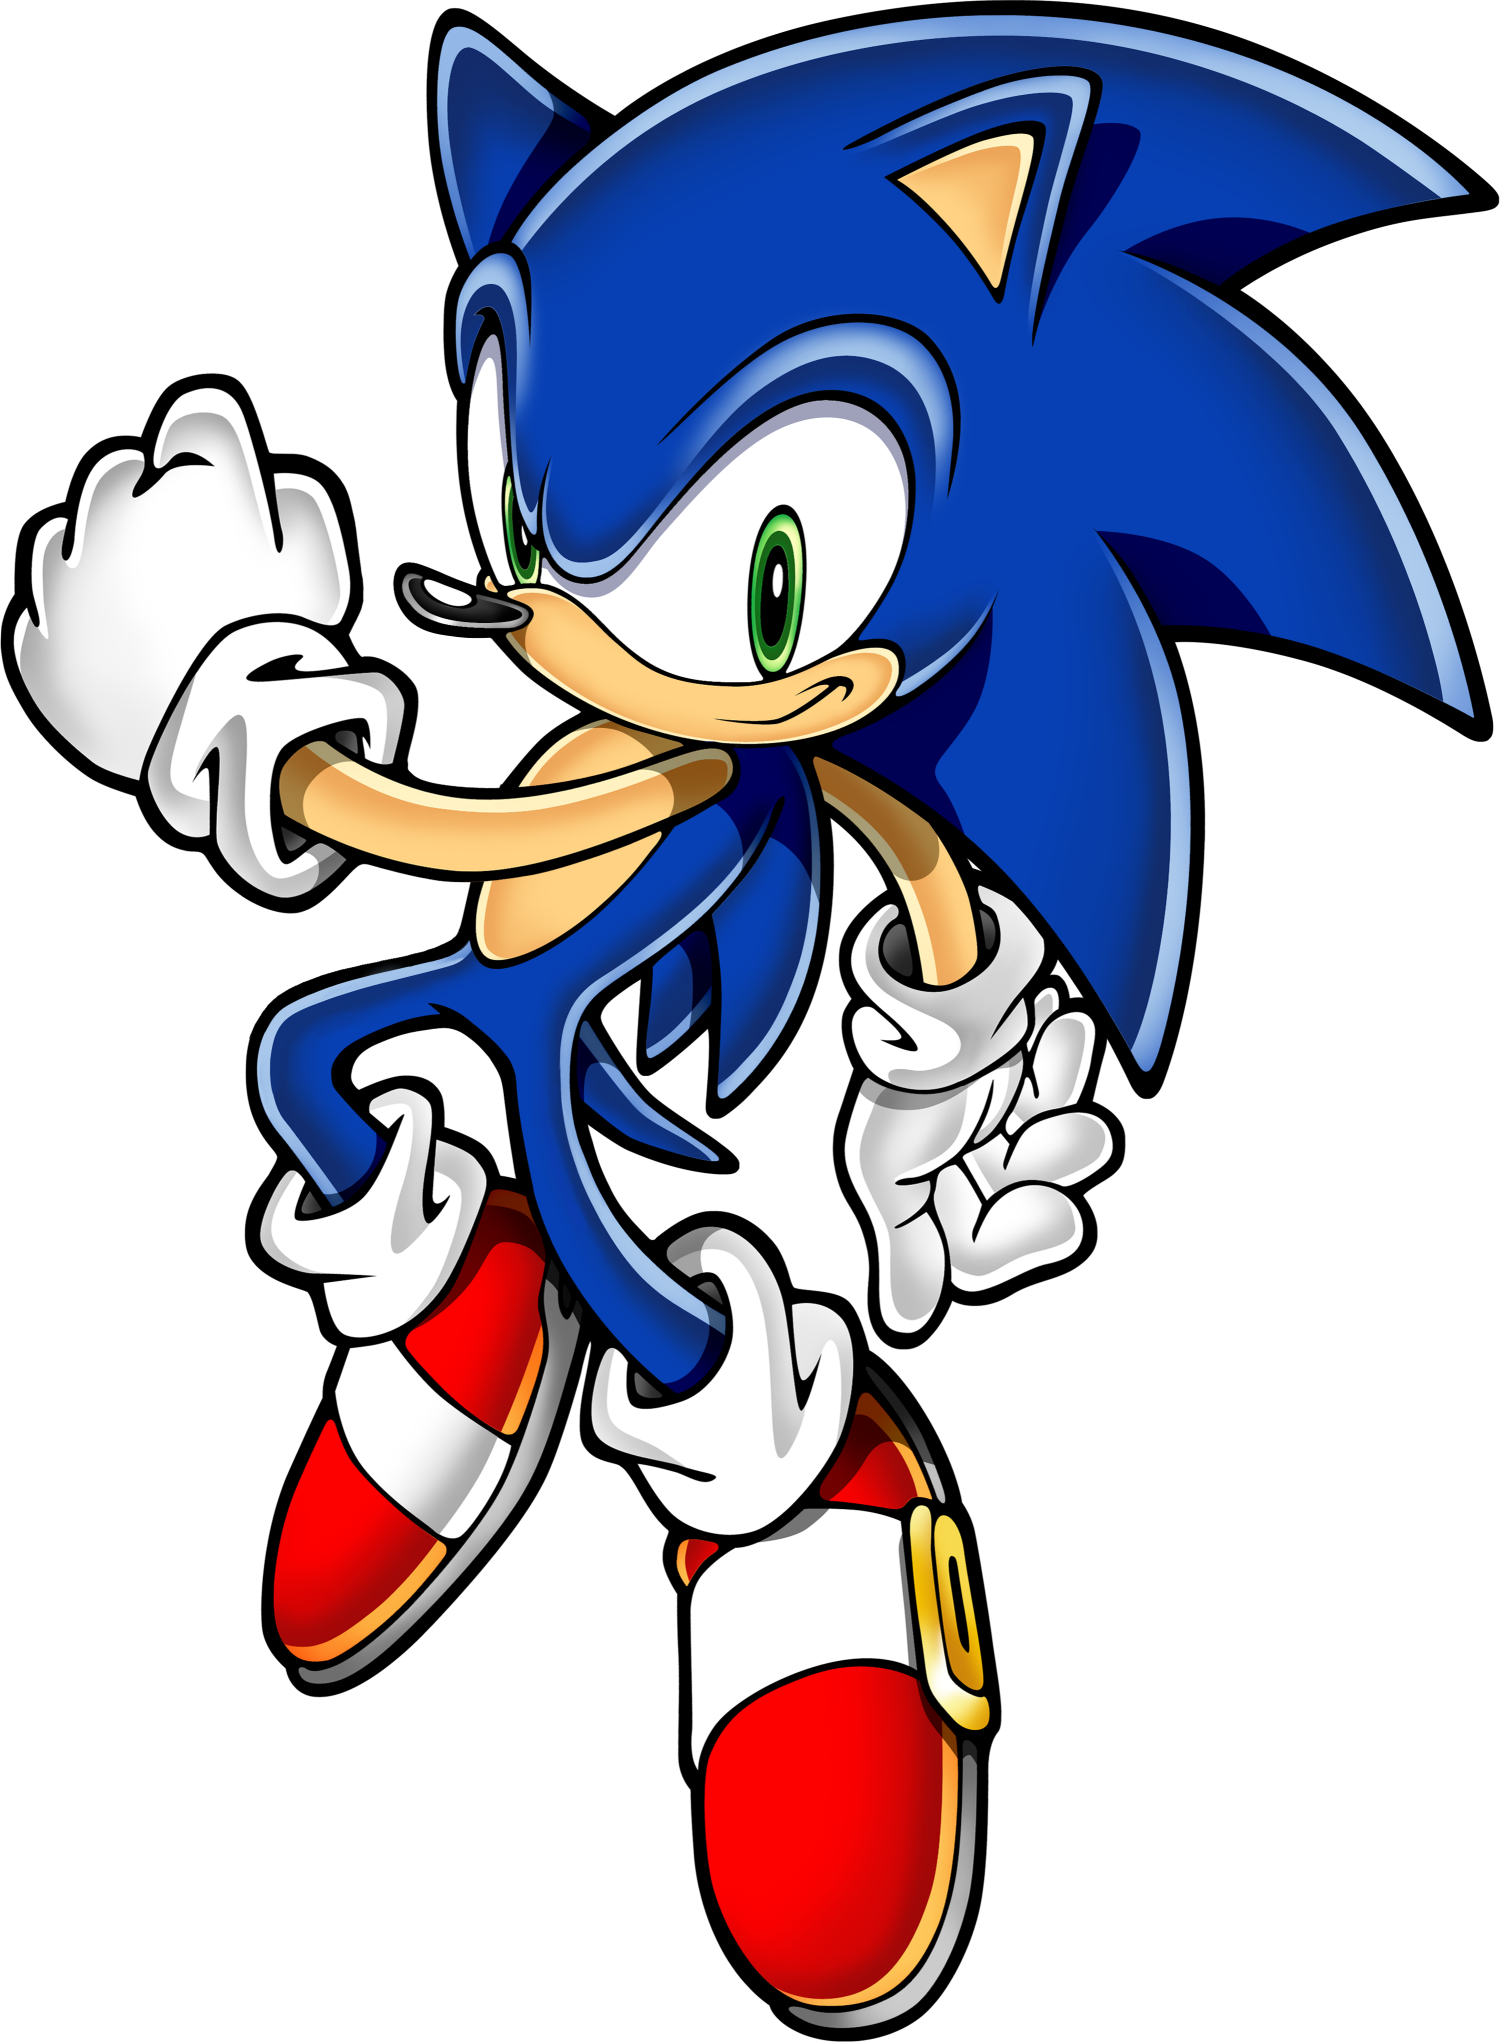 Sonic the Hedgehog (Master ventus Universe)